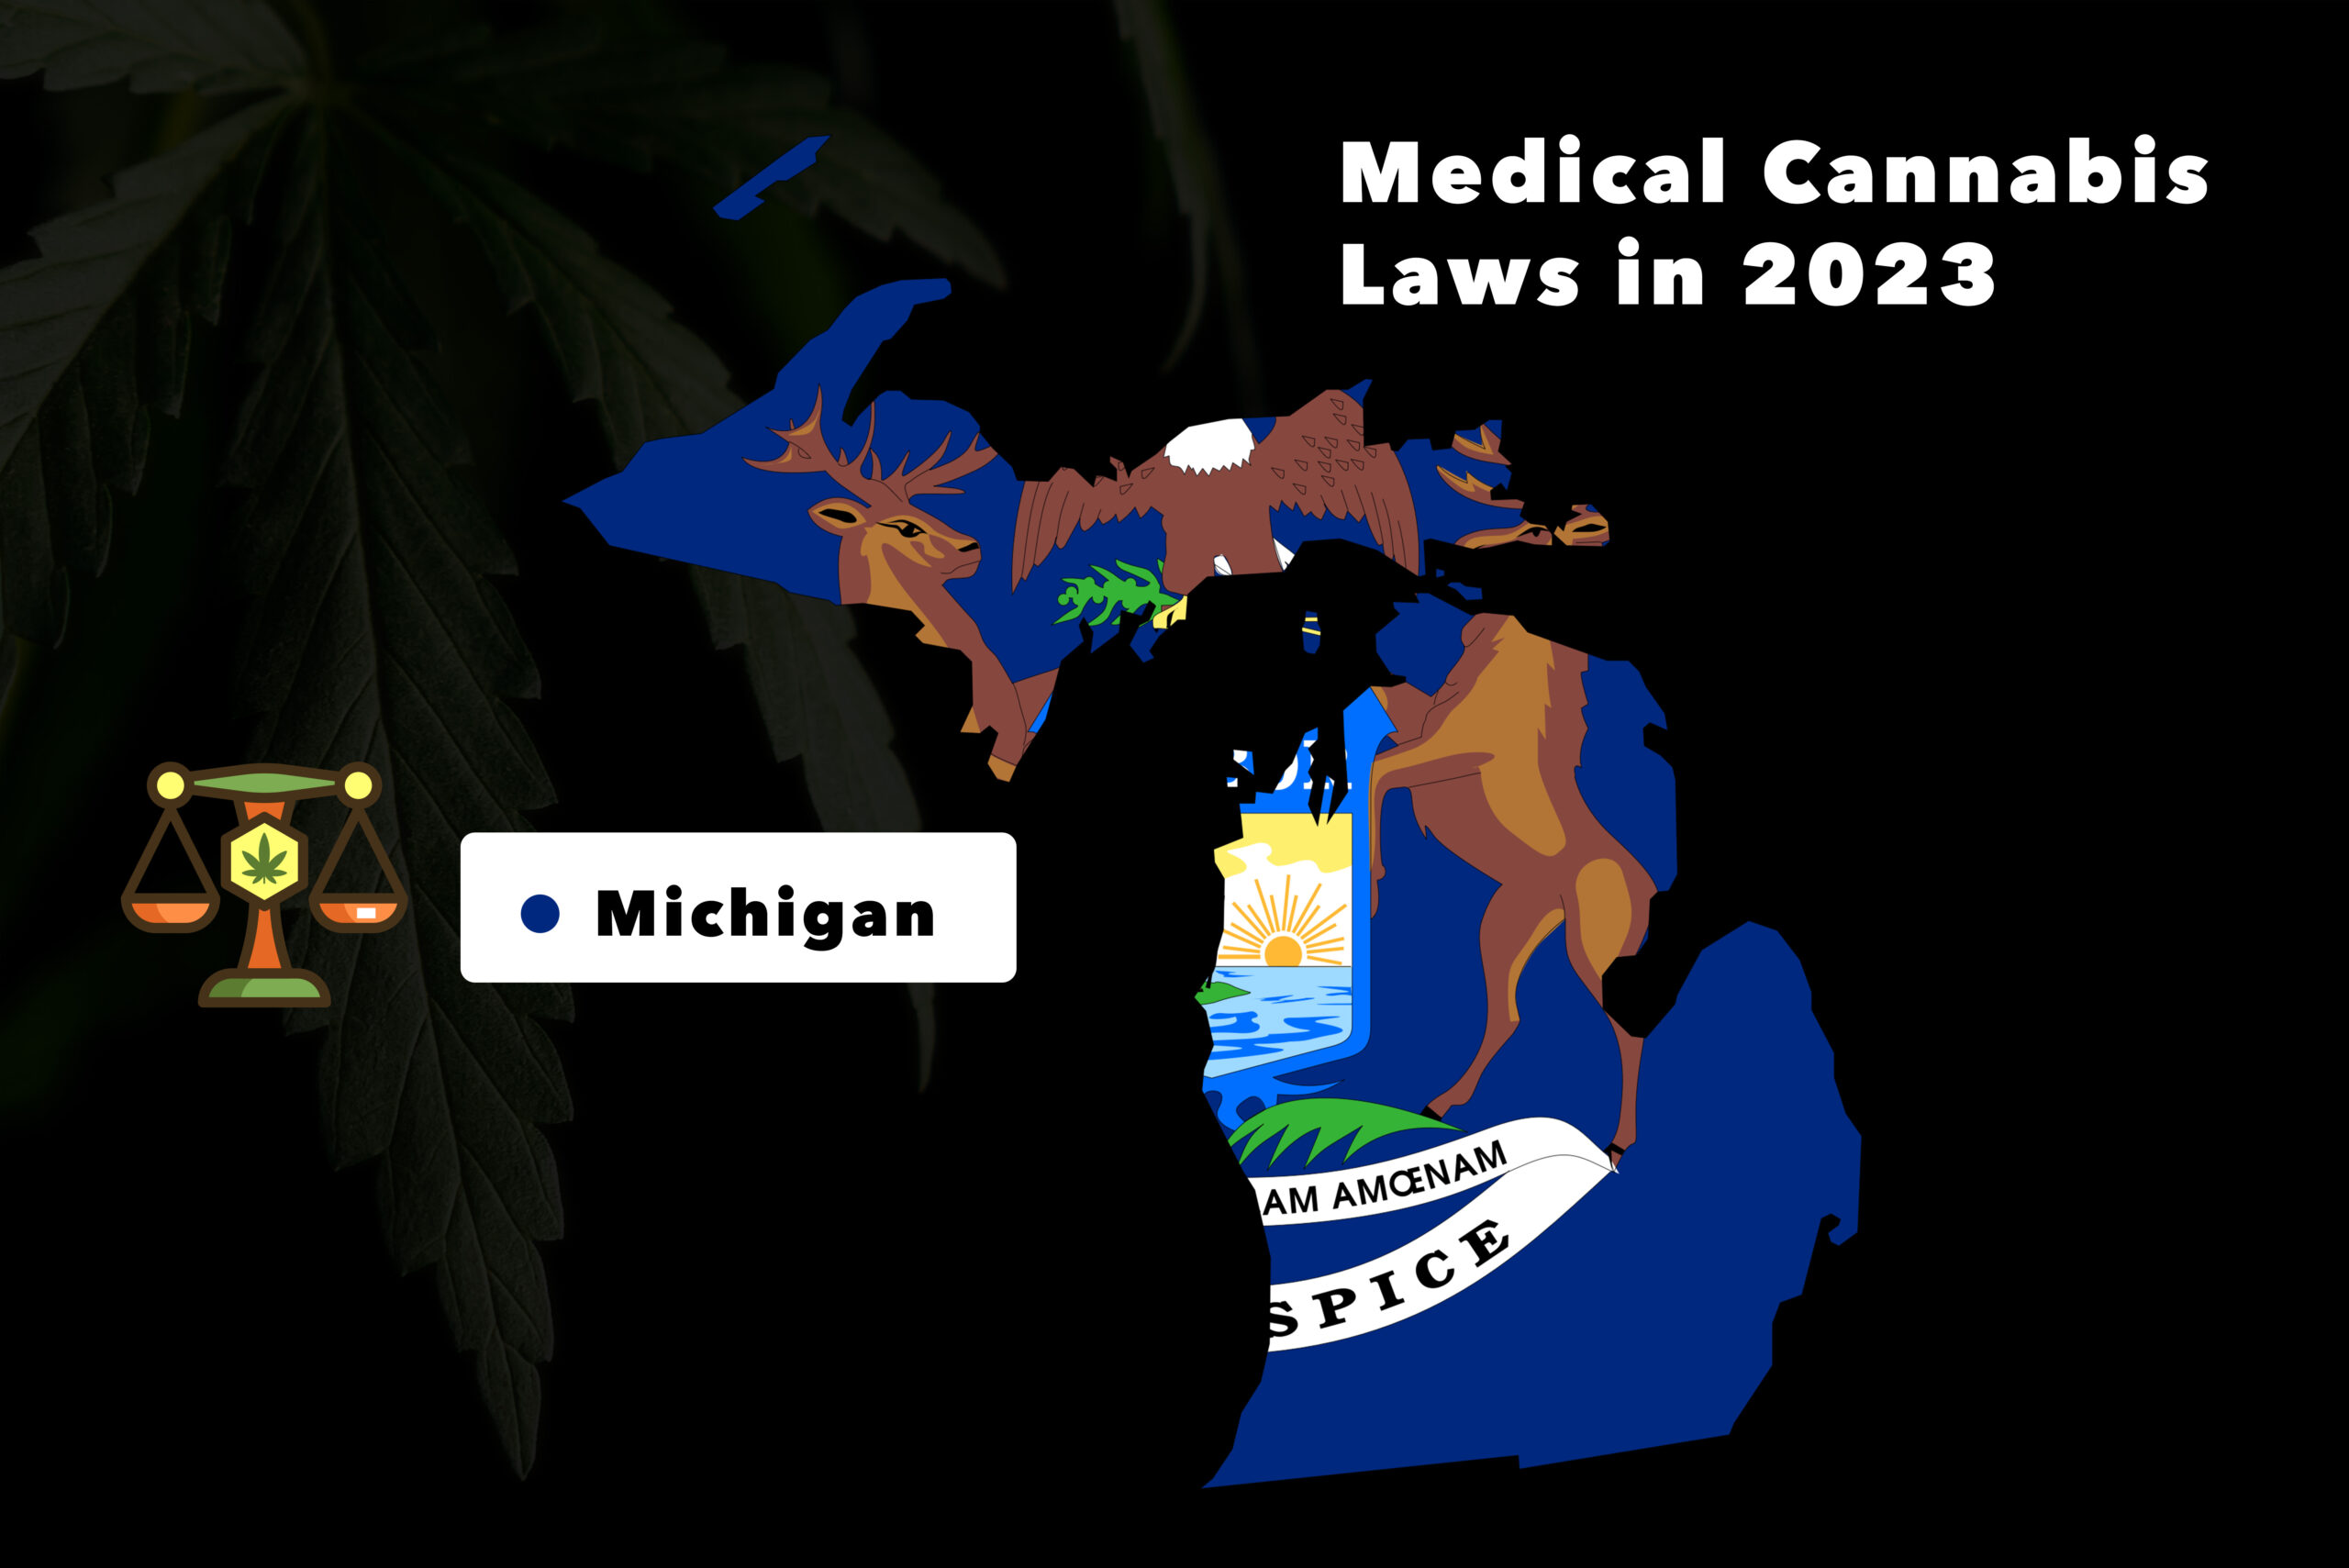 Michigan medical cannabis laws